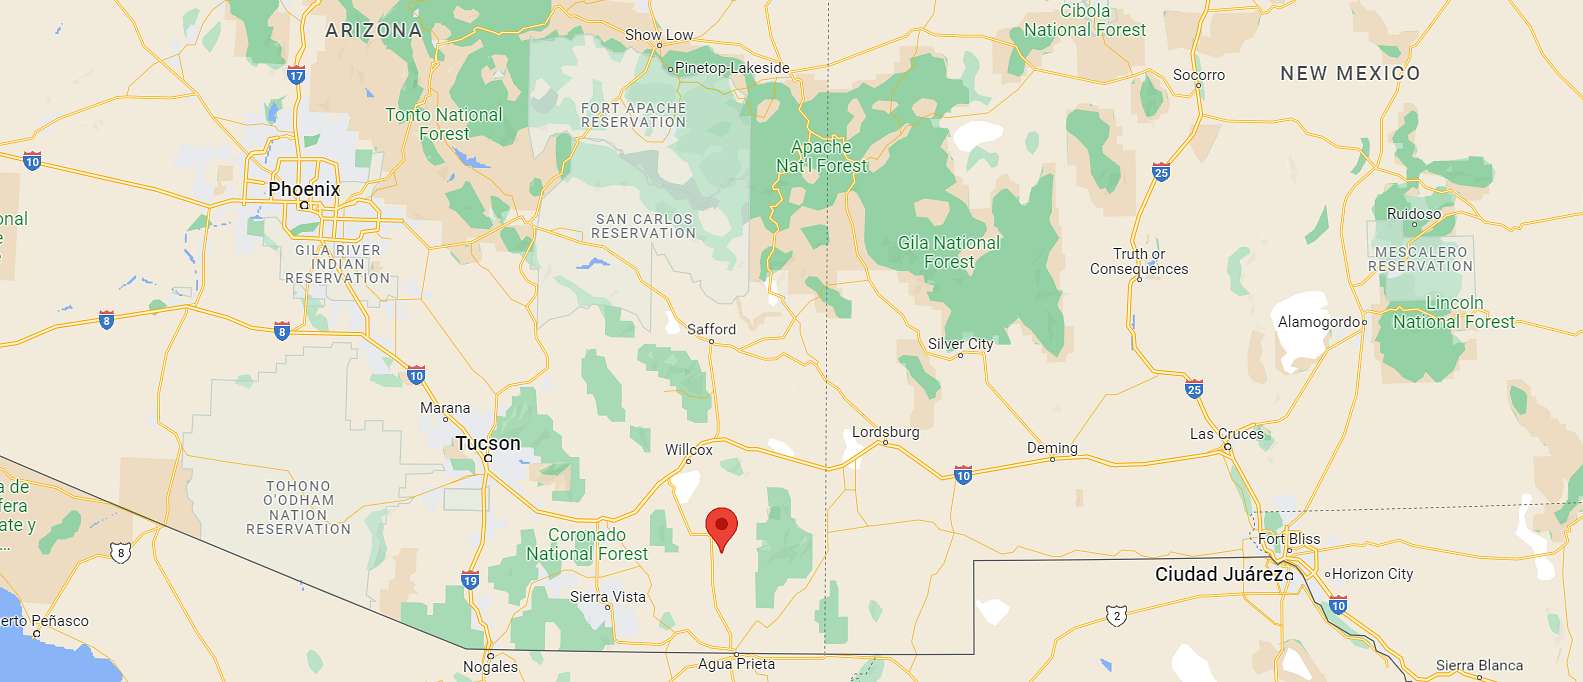 2.6 Acres of Residential Land for Sale in Elfrida, Arizona